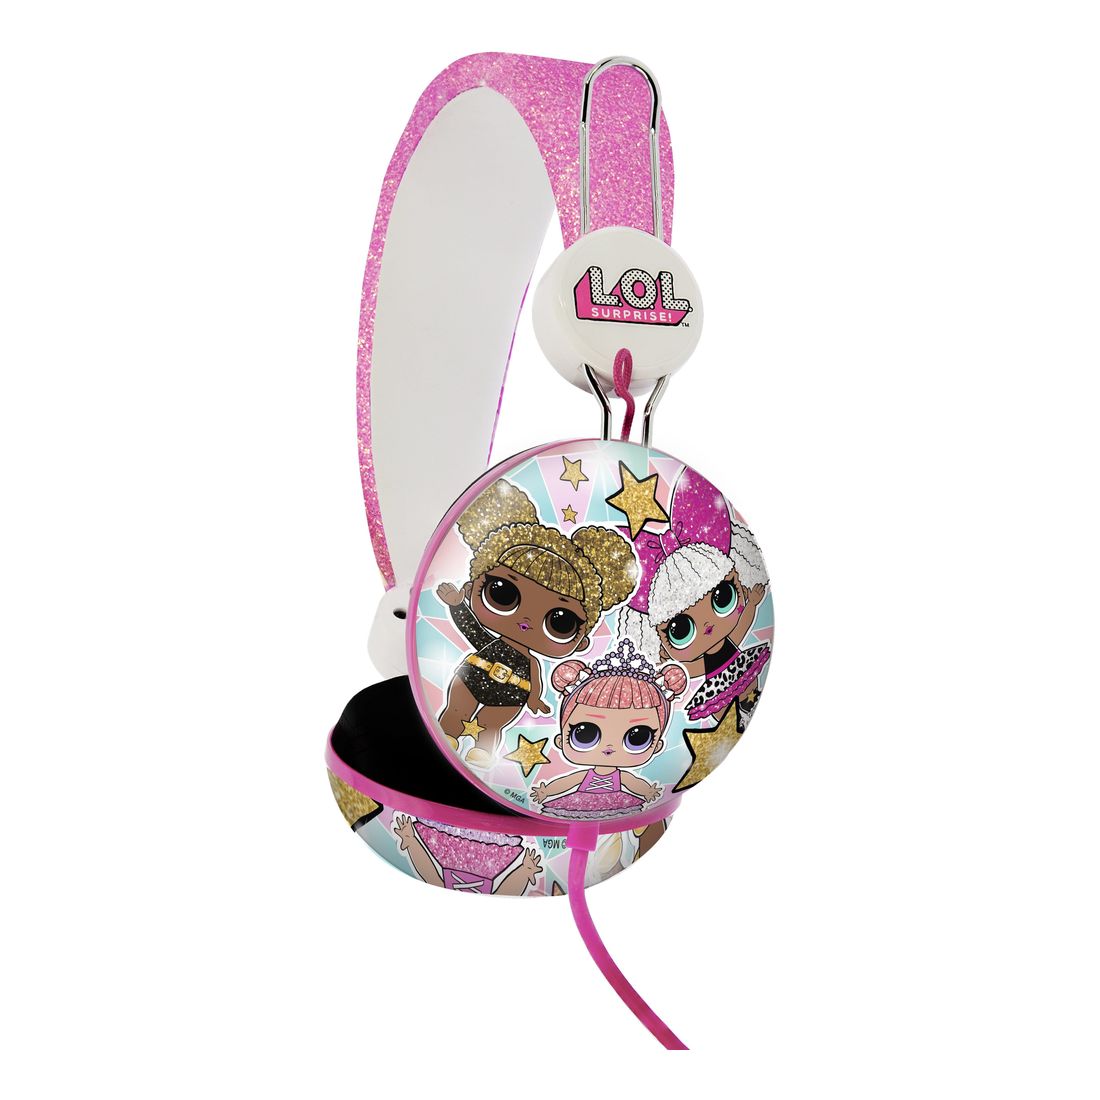 OTL L.O.L. Surprise Glitter Glam Teen Stereo Headphones - Pink